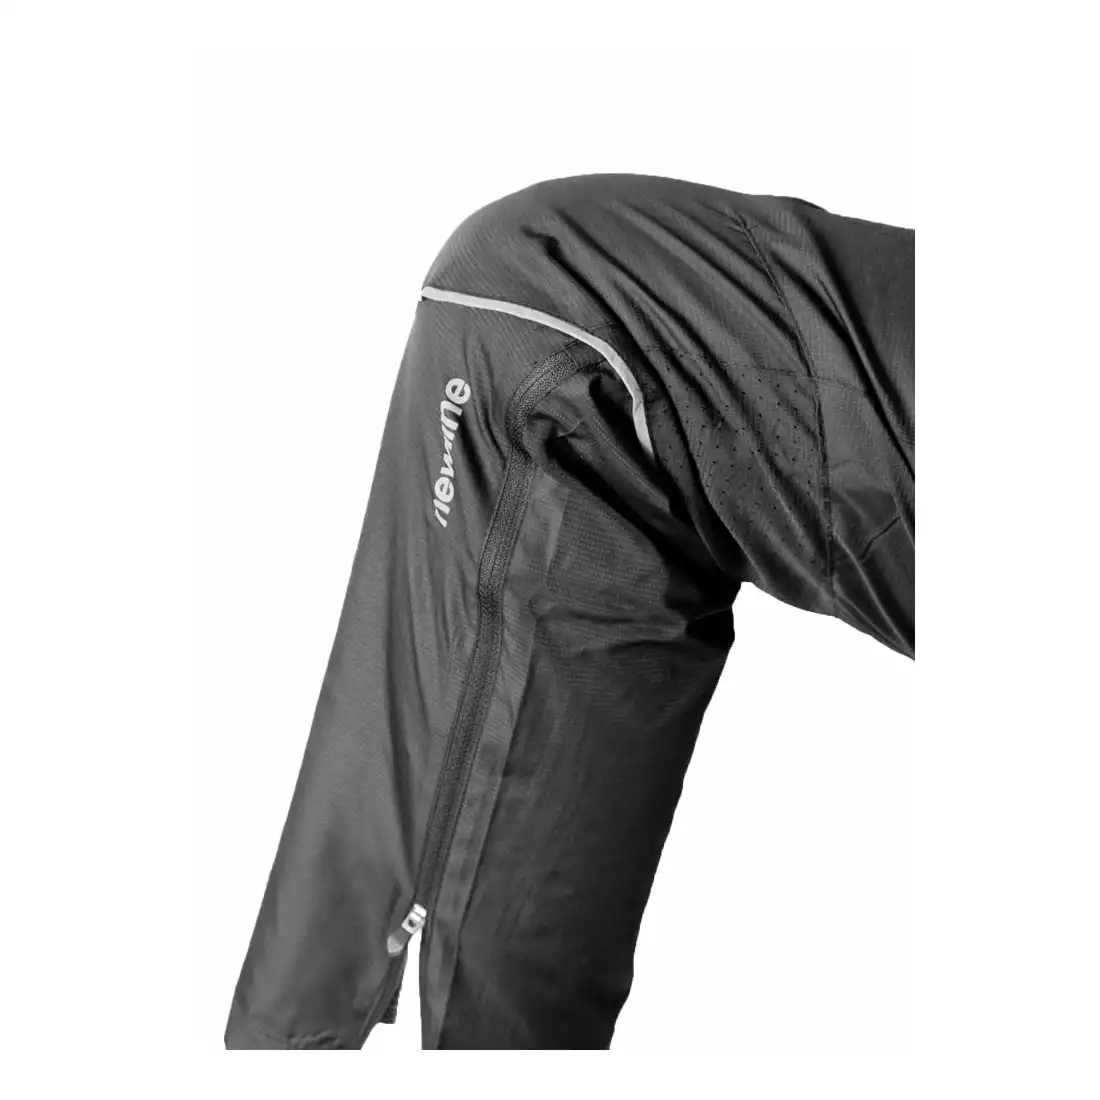 NEWLINE PERFORM THERMAL PANTS - damskie spodnie do biegania 10046-060